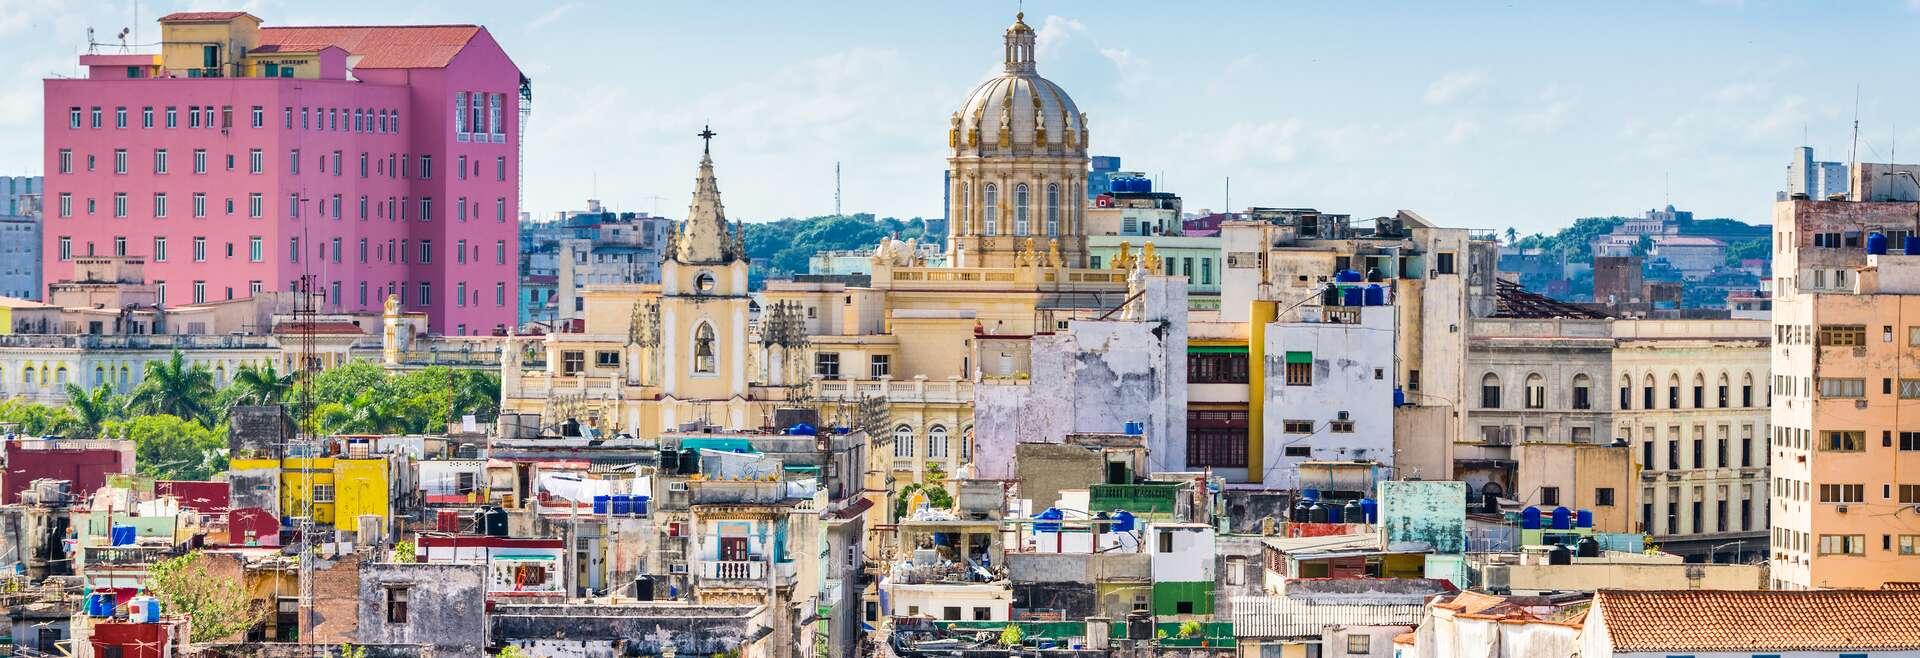 Sprachaufenthalt Kuba, Havanna - Stadt